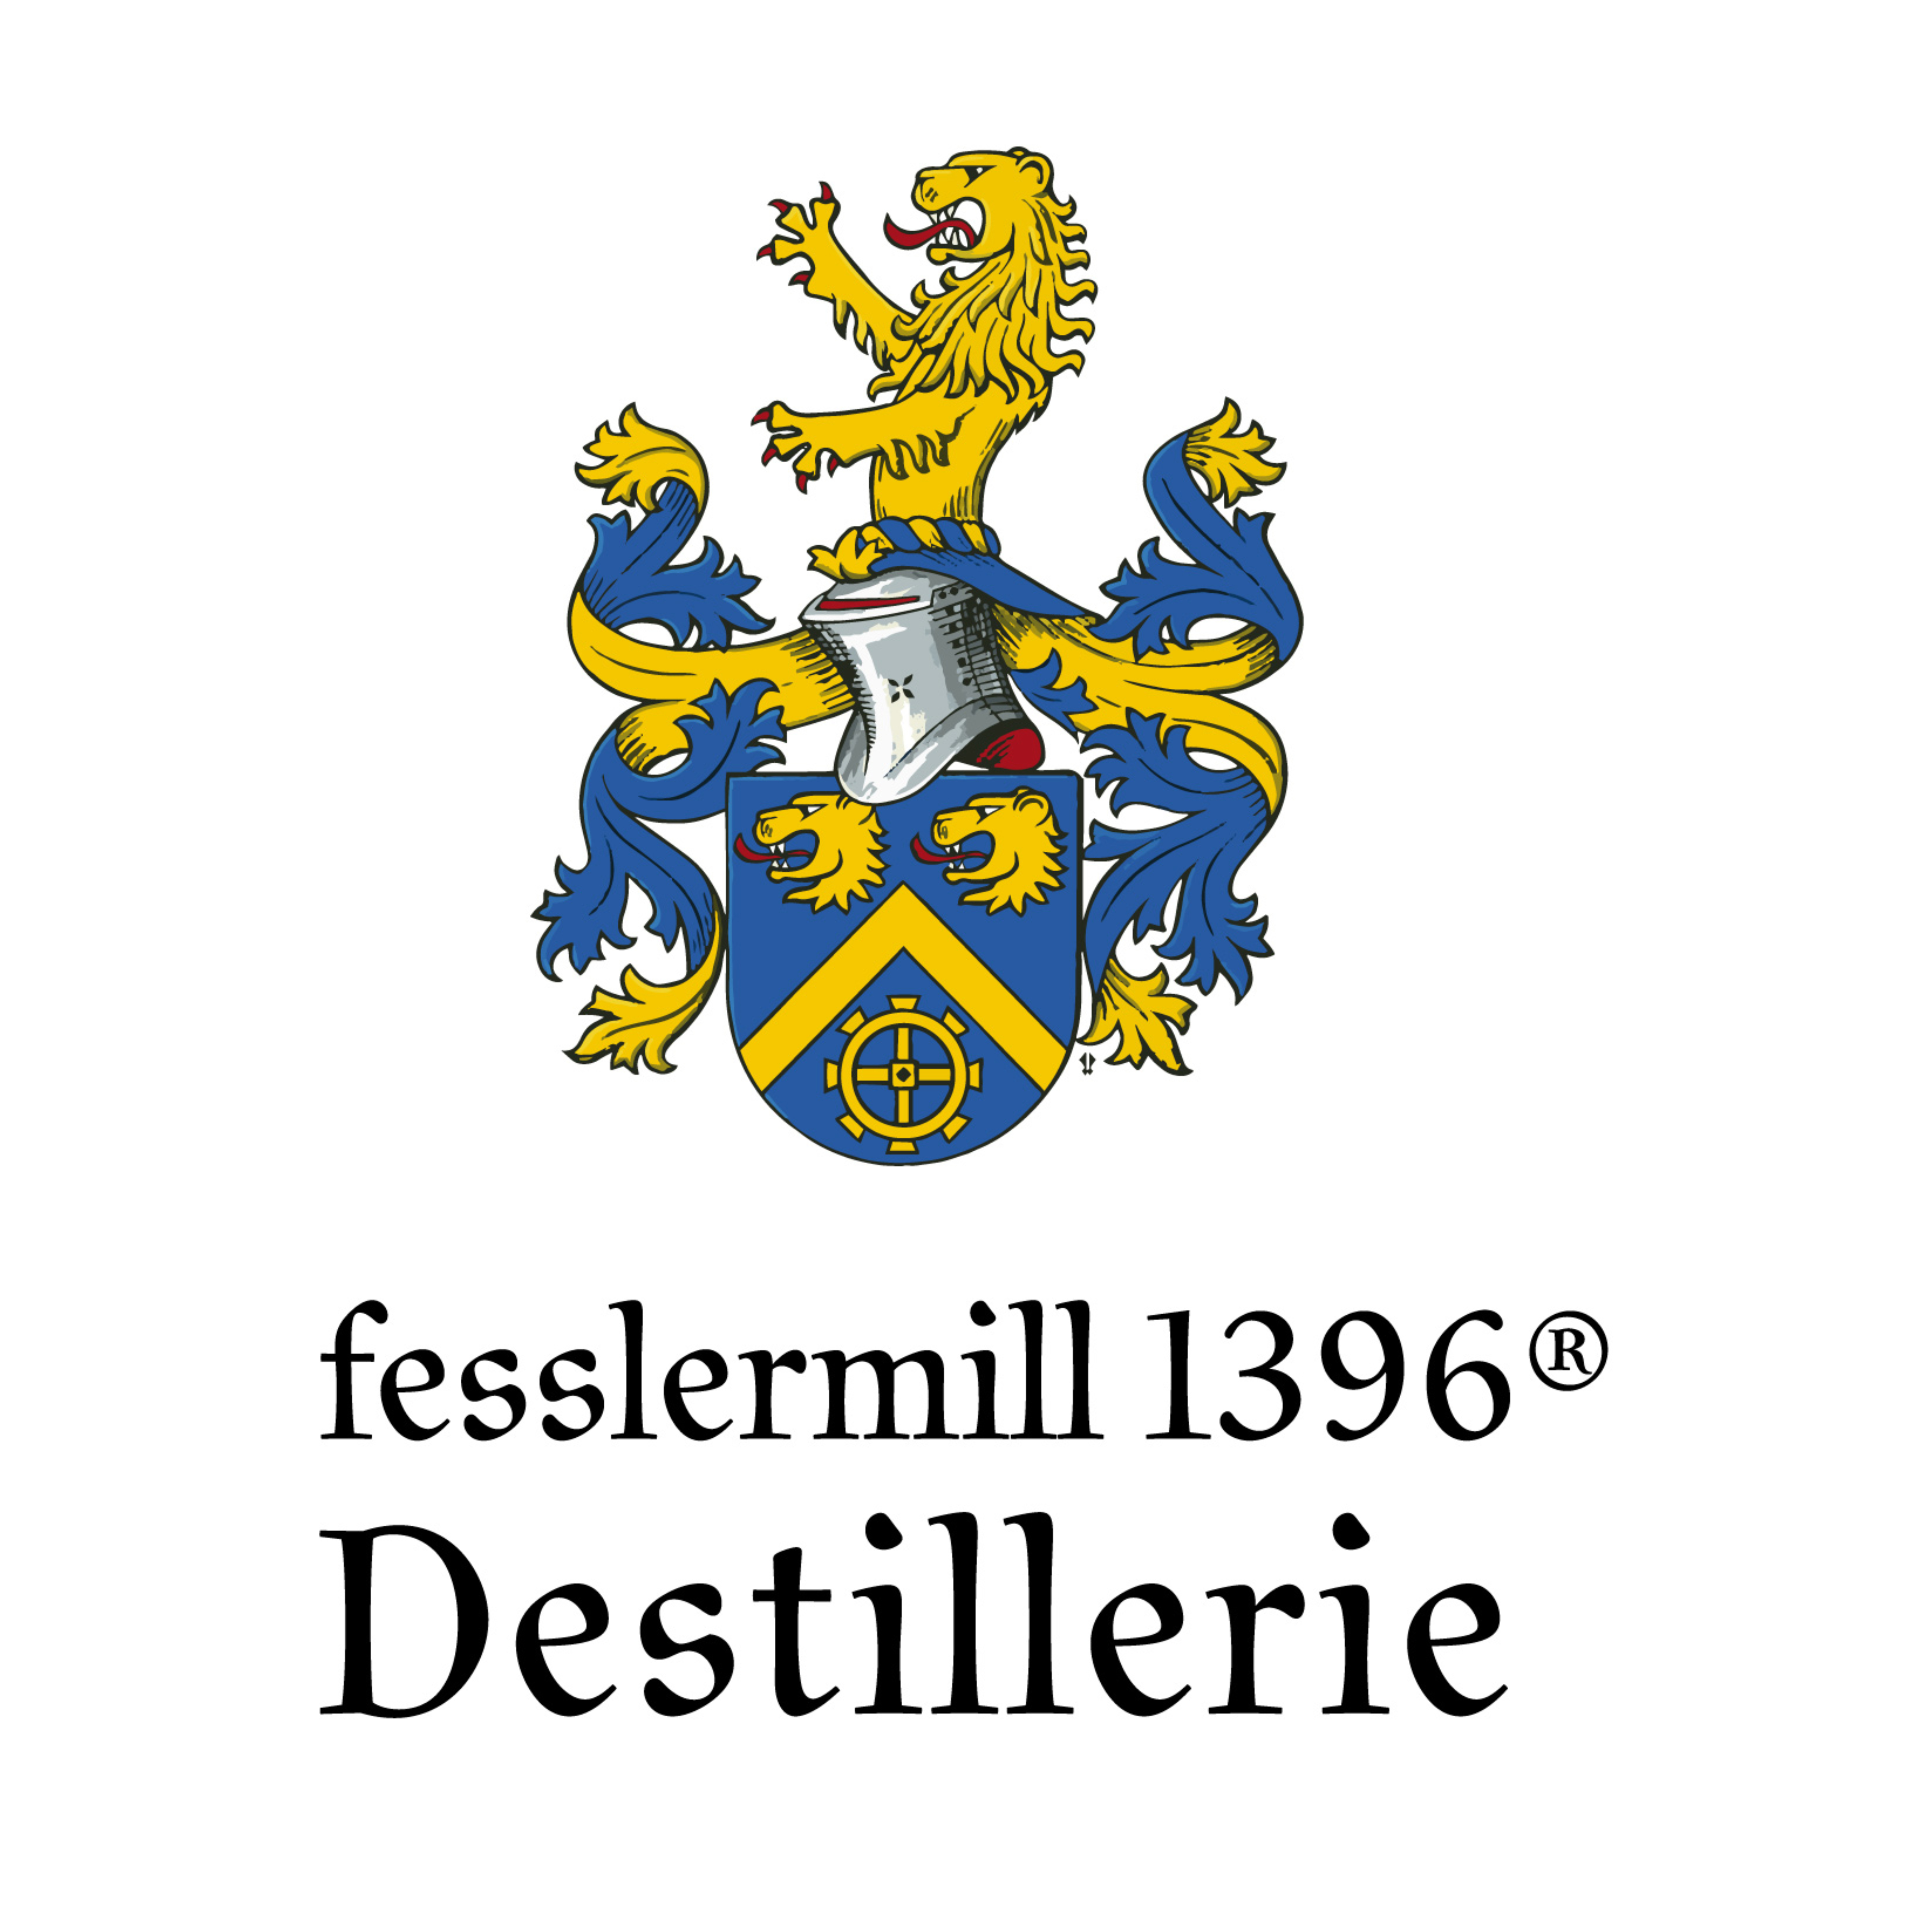 Fesslermill 1396® Destillerie